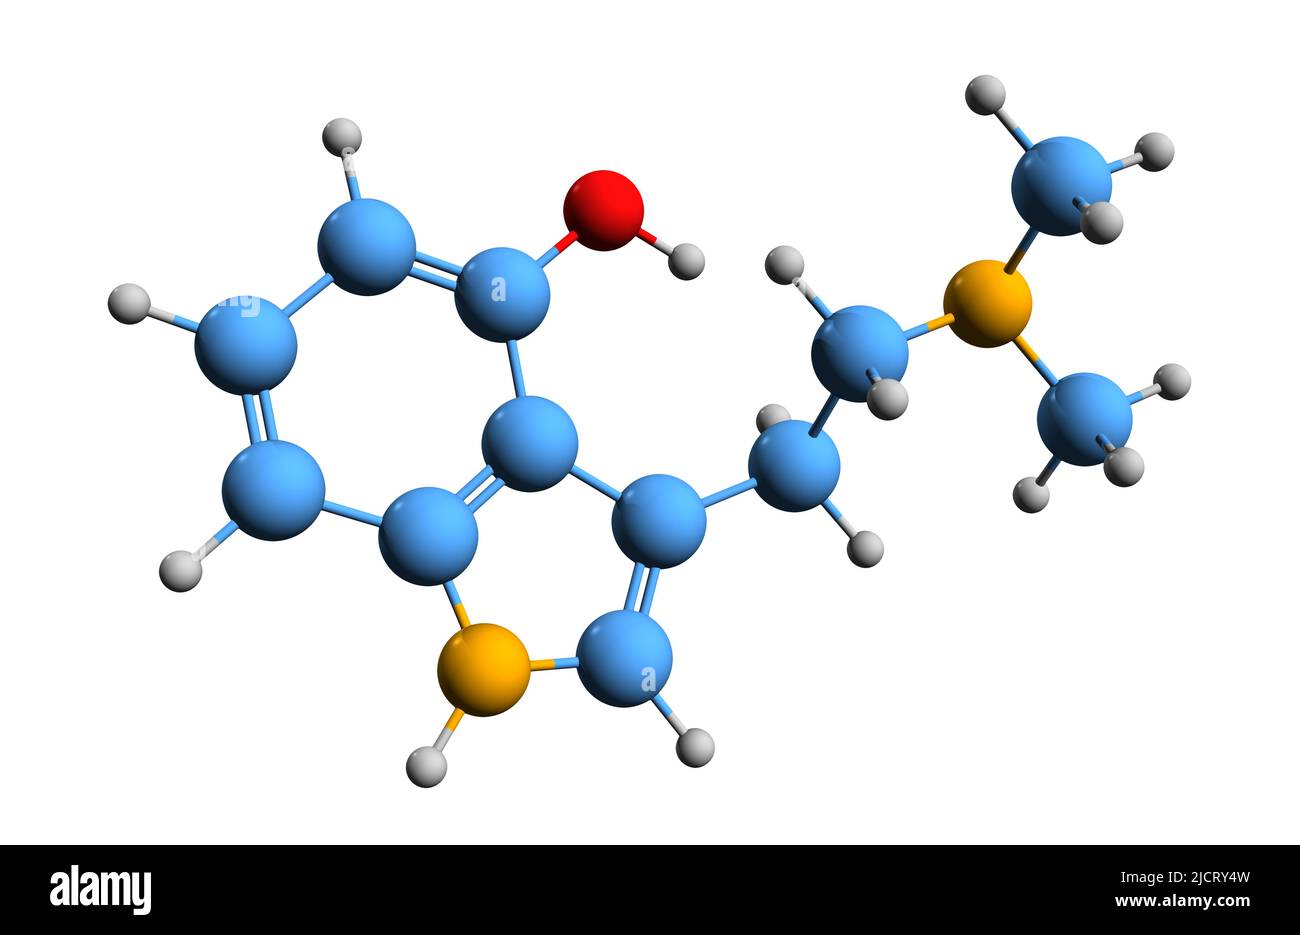 3D Imagen de la fórmula esquelética de psilocina - estructura química molecular de psilocin o psilotsina aislada sobre fondo blanco Foto de stock